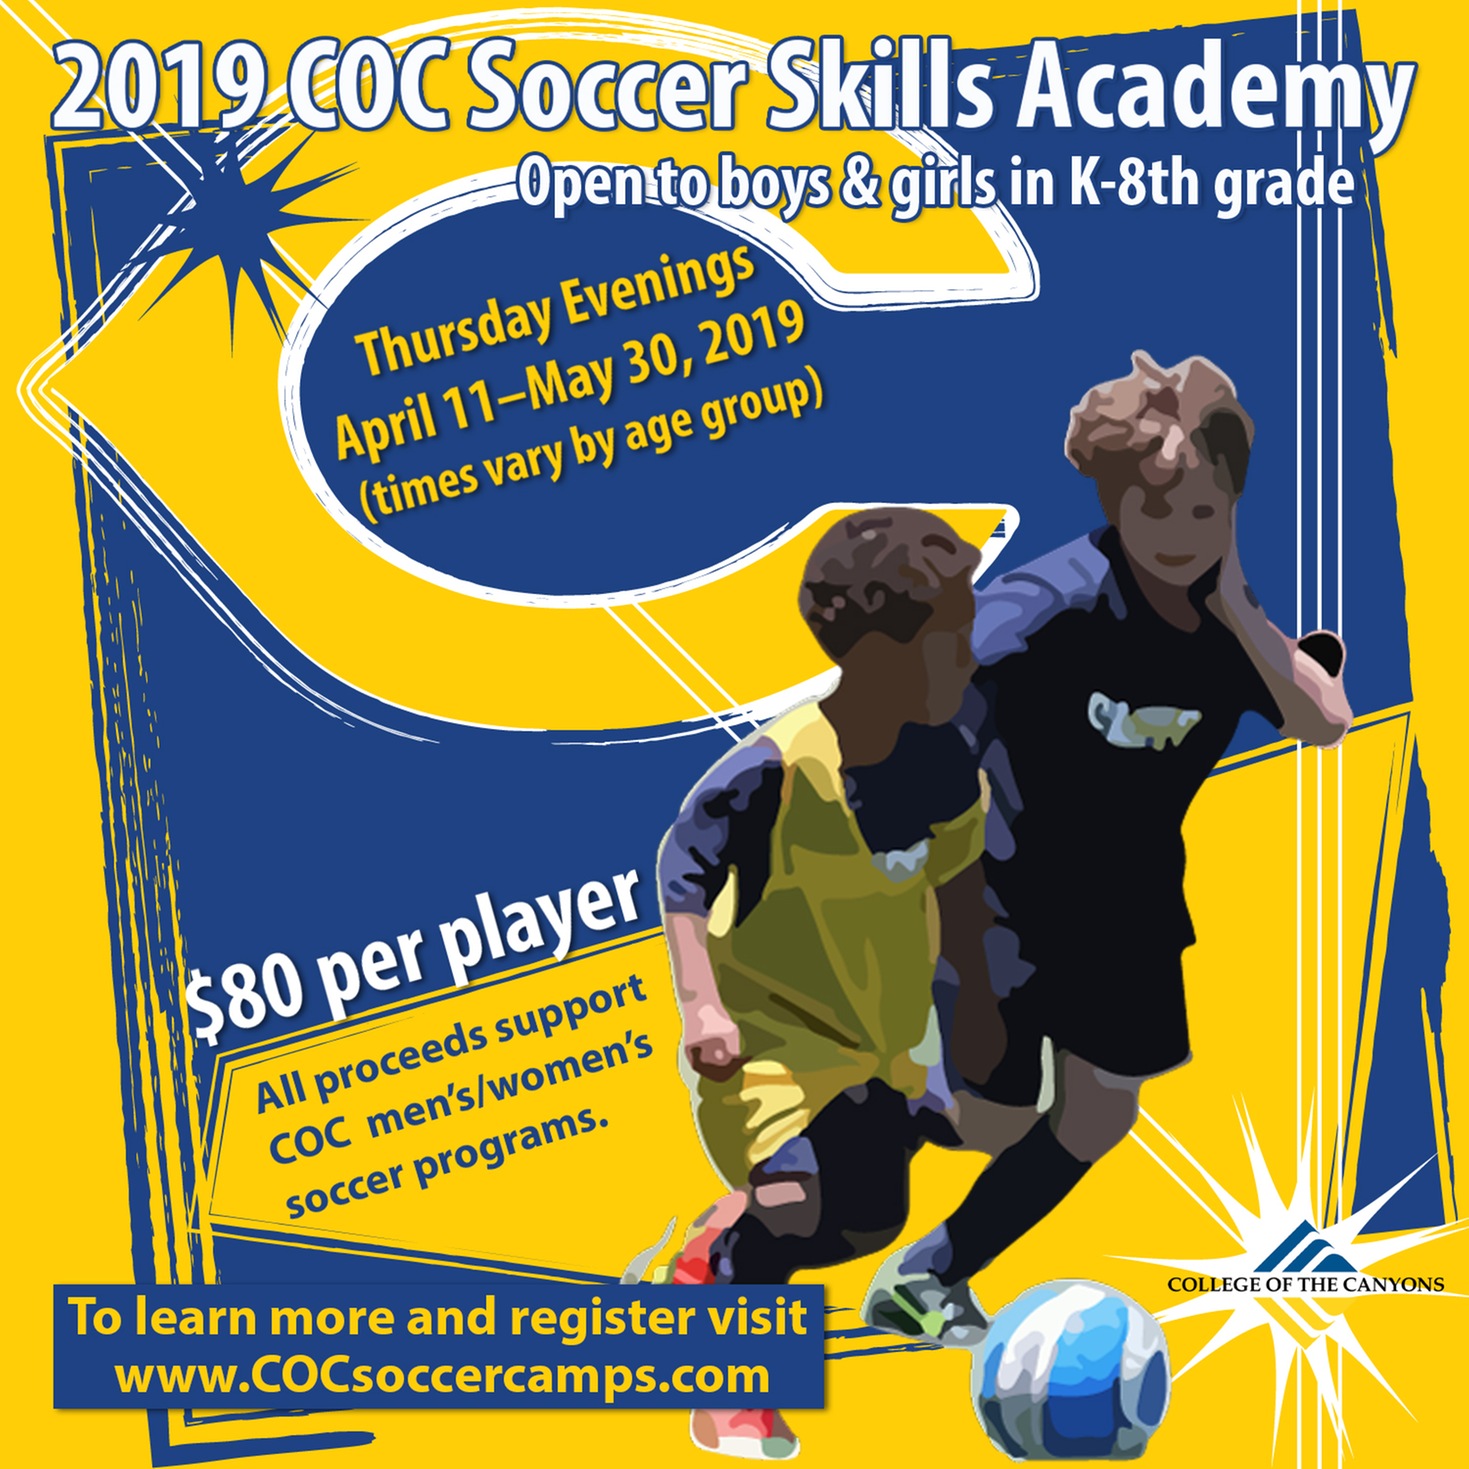 2019 COC Soccer Skills Academy flier.